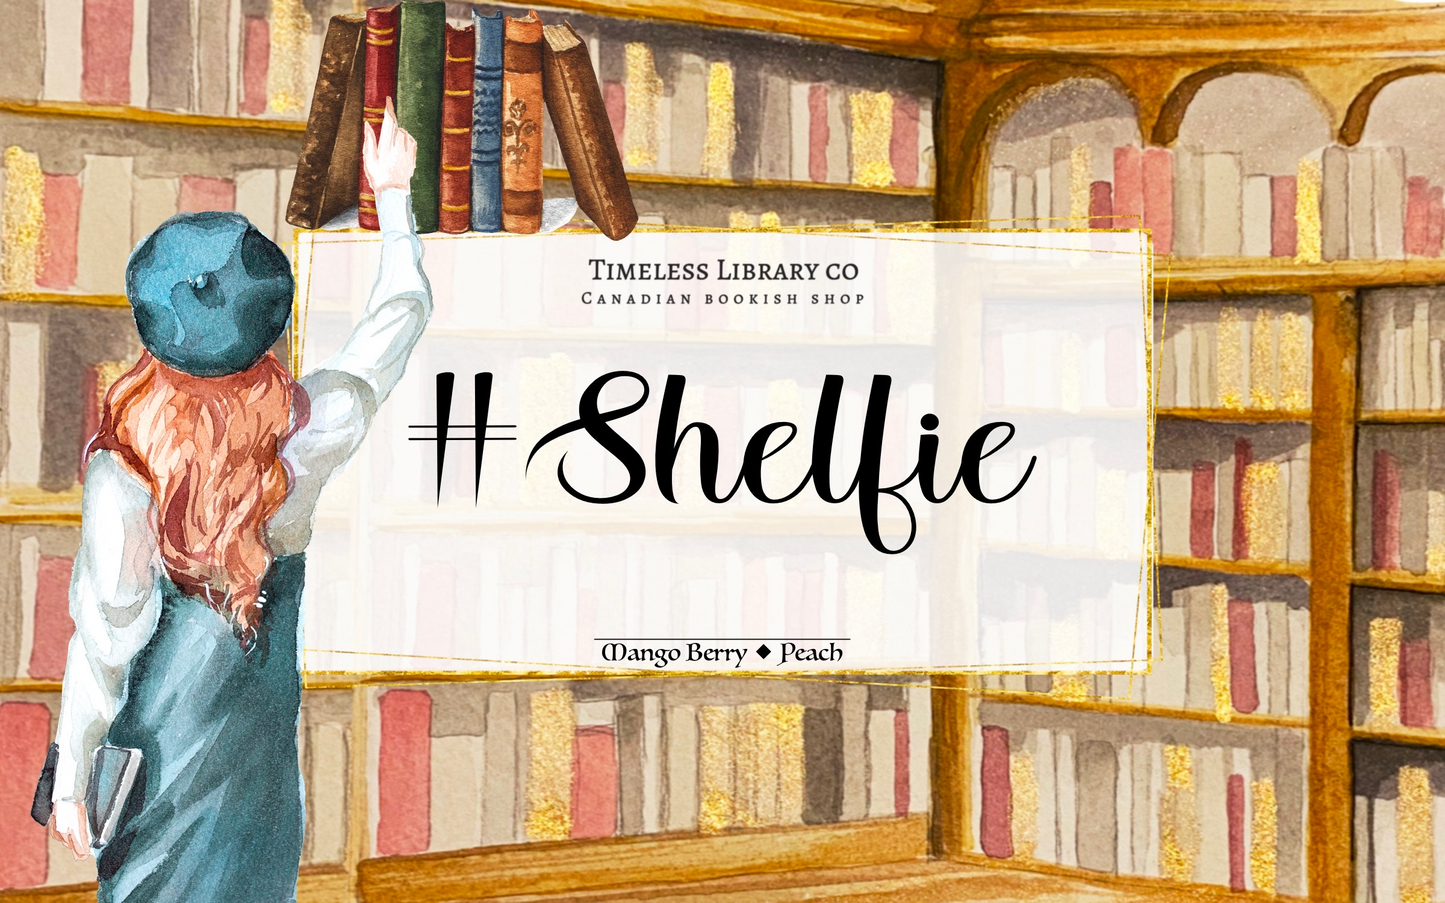 # Shelfie